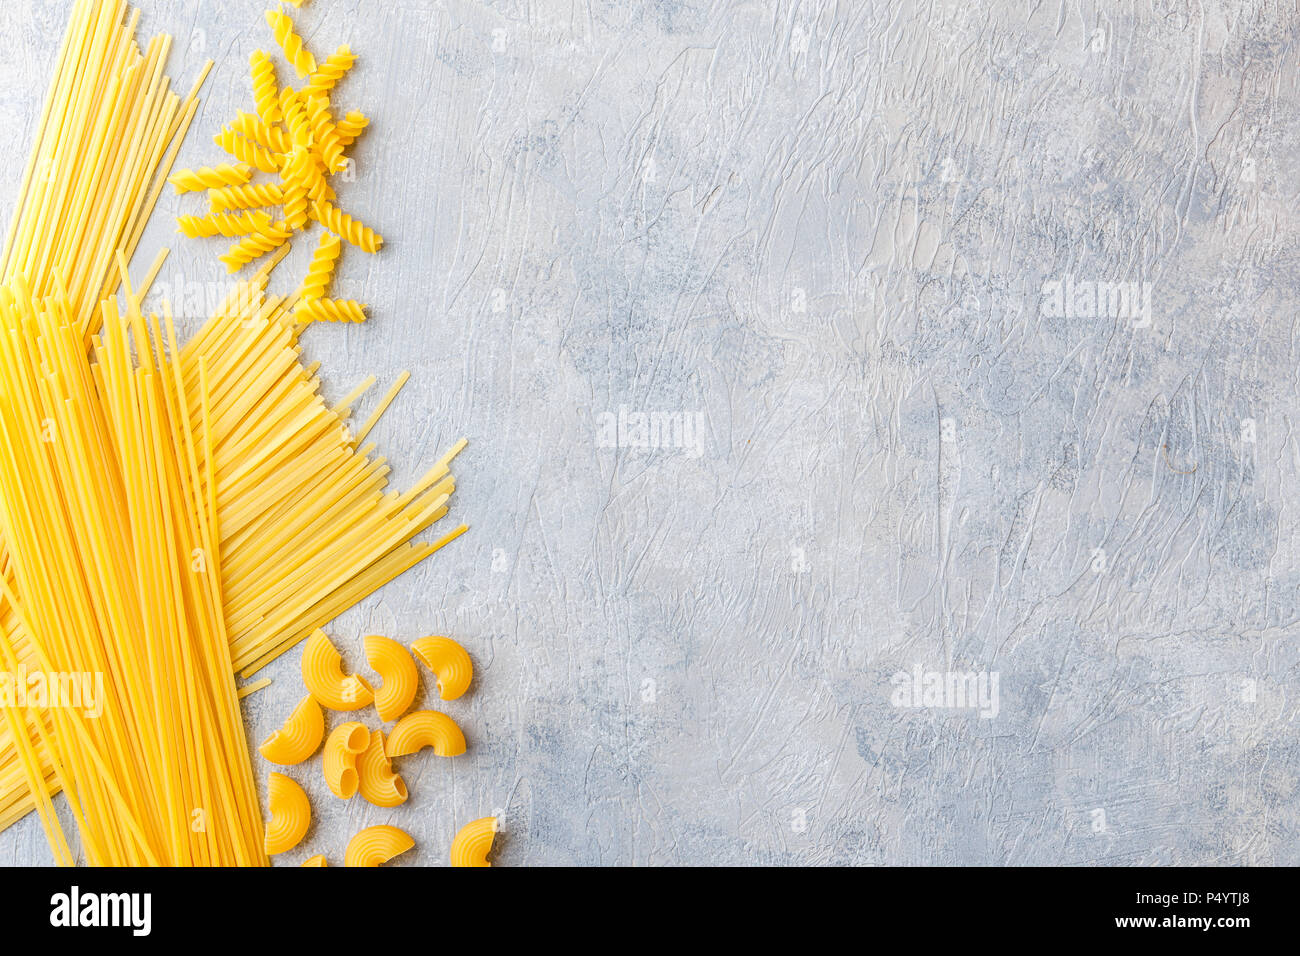 Variety of types and shapes of dry Italian pasta - Spaghetti, Linguine, Conchiglie, Elbow macaroni, Fusilli. Stock Photo